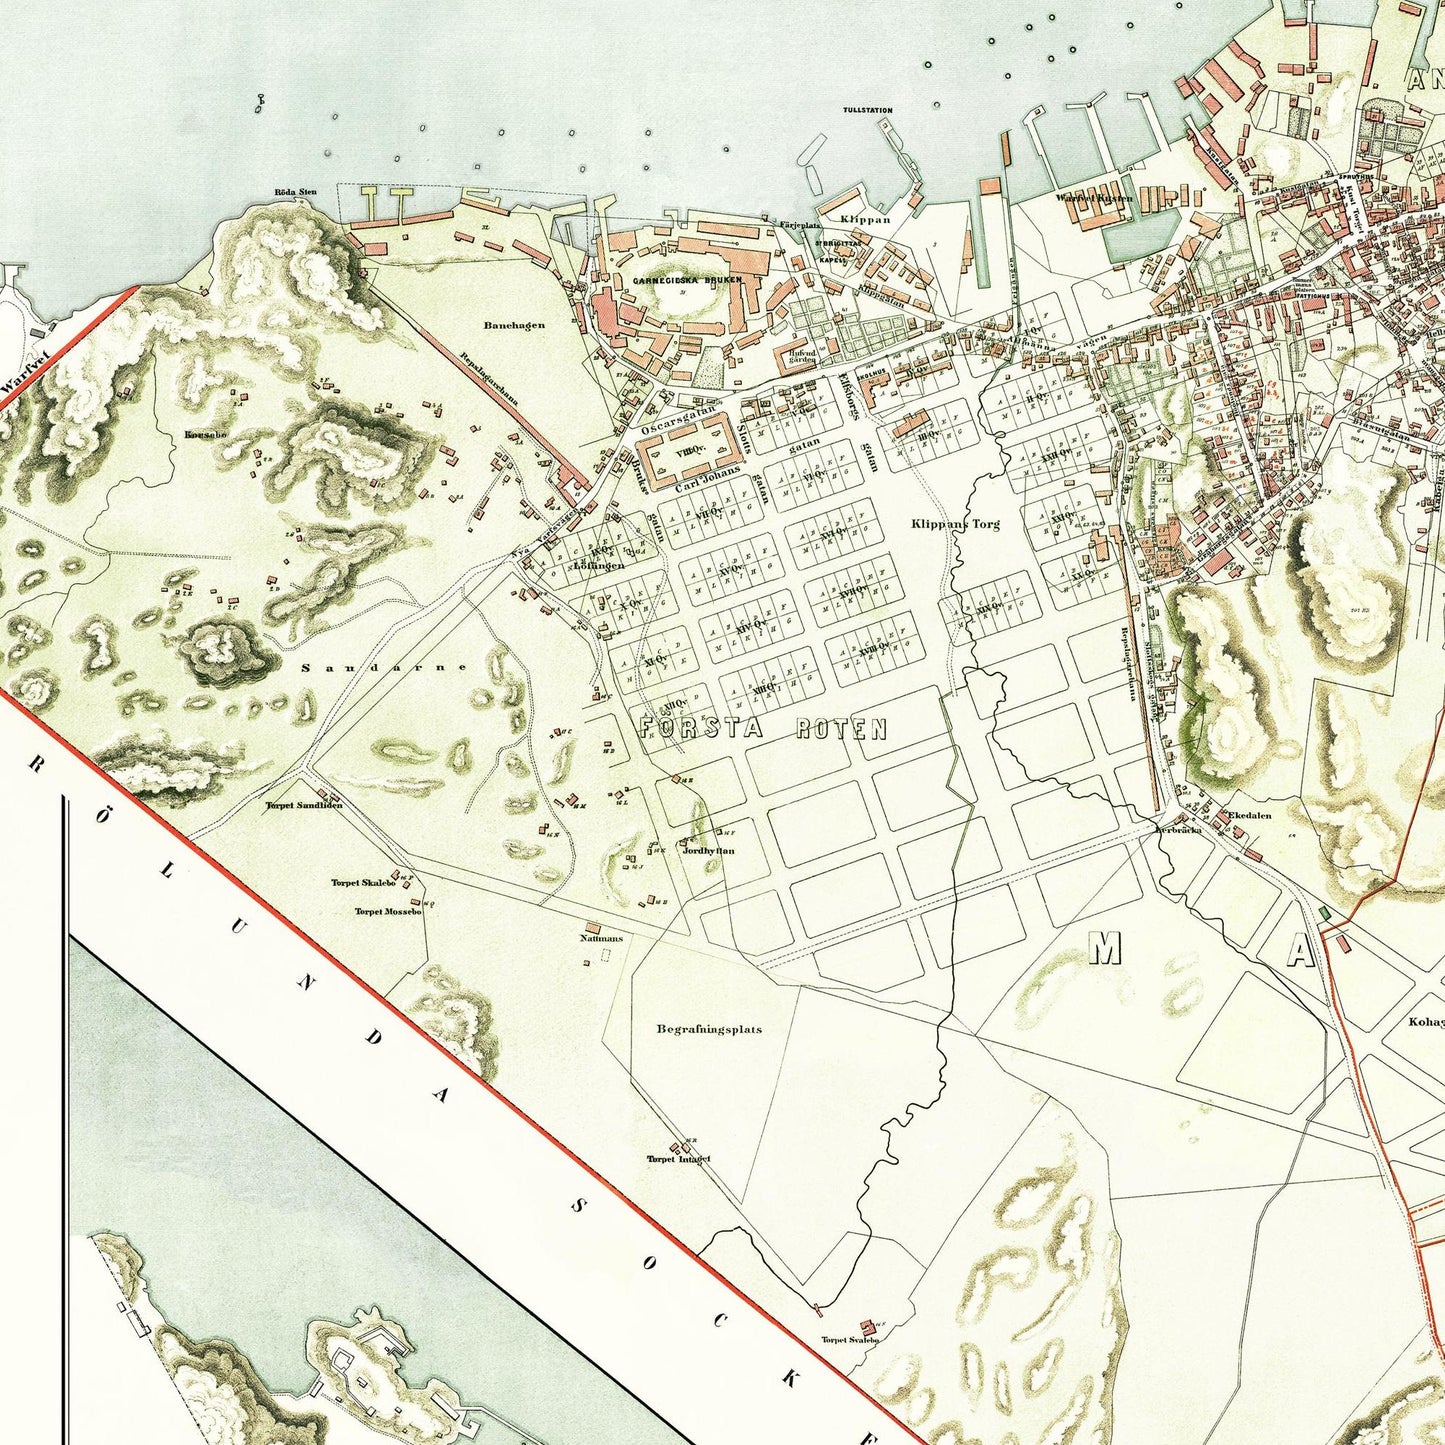 Historischer Stadtplan Göteborg um 1888